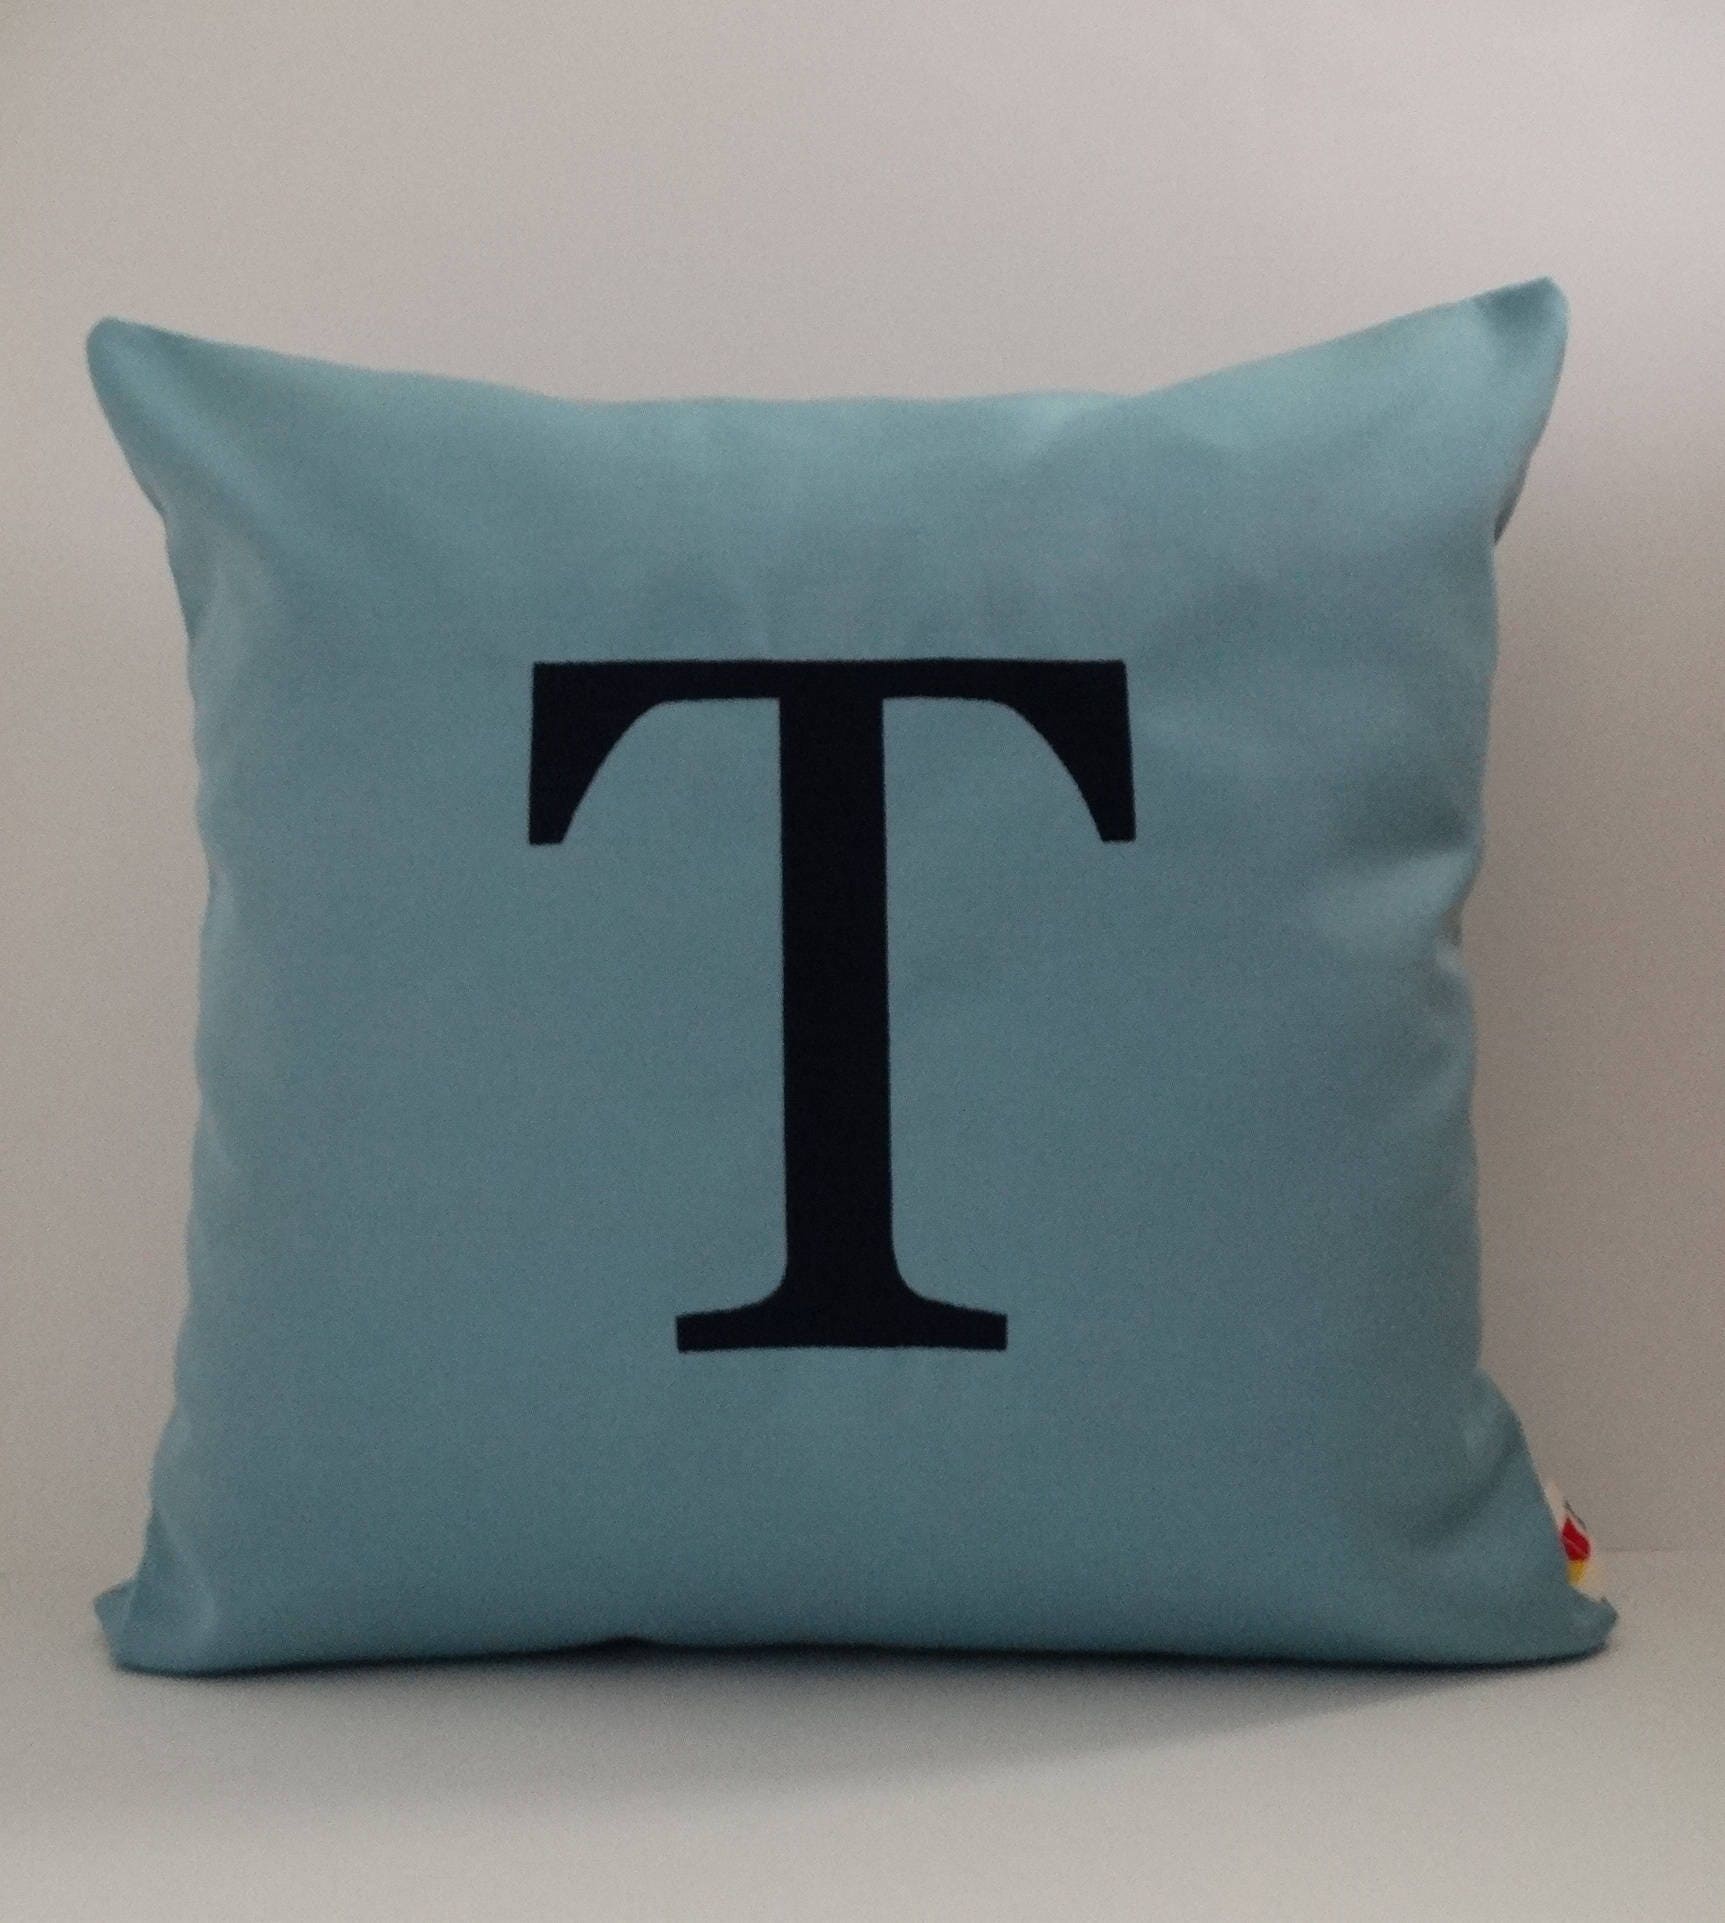 Monogram Initial Pillow Cover Sunbrella Indoor Outdoor | Etsy